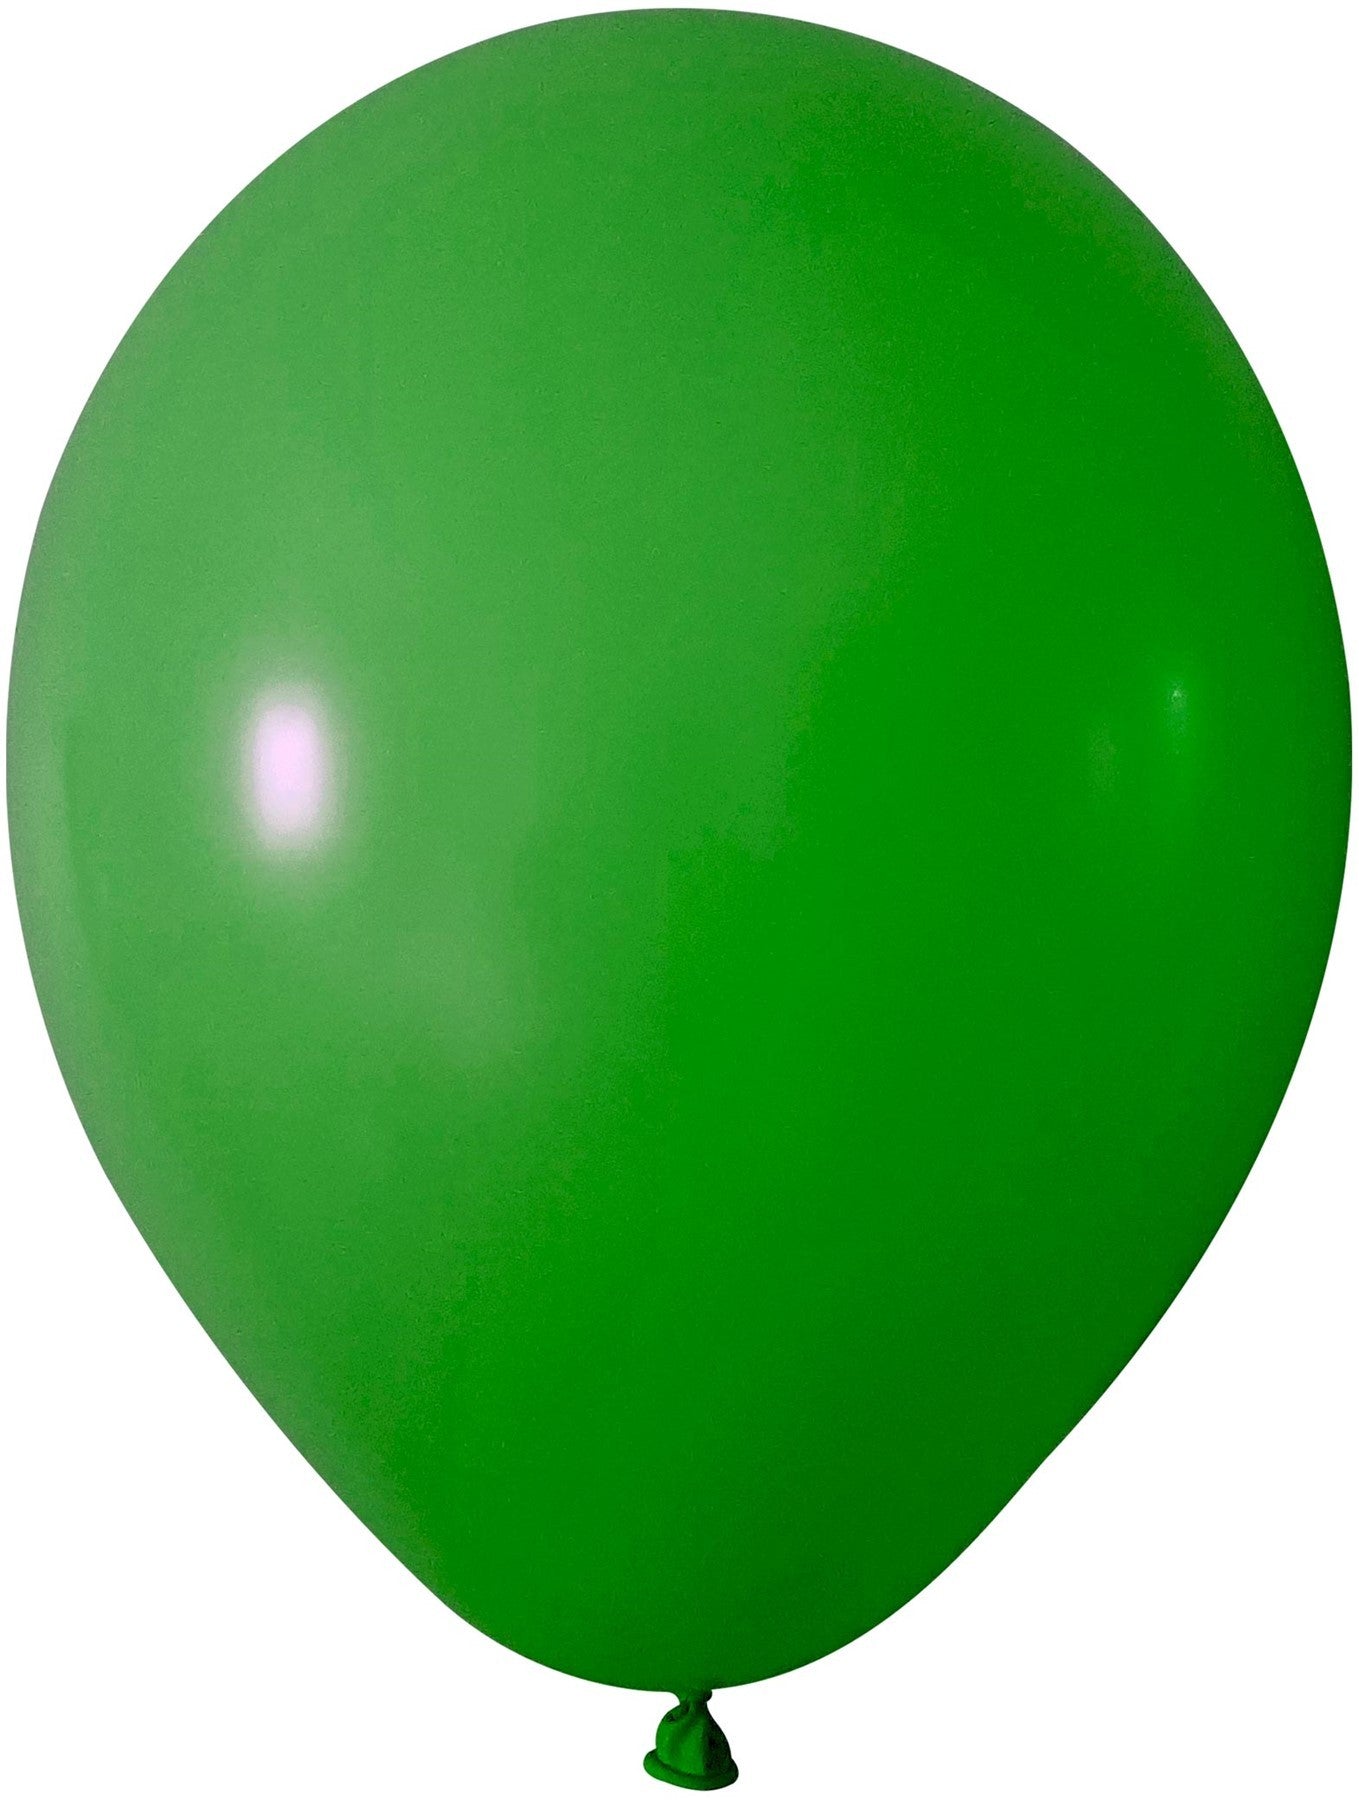 View Green Latex Balloon 12 inch Pk 100 information